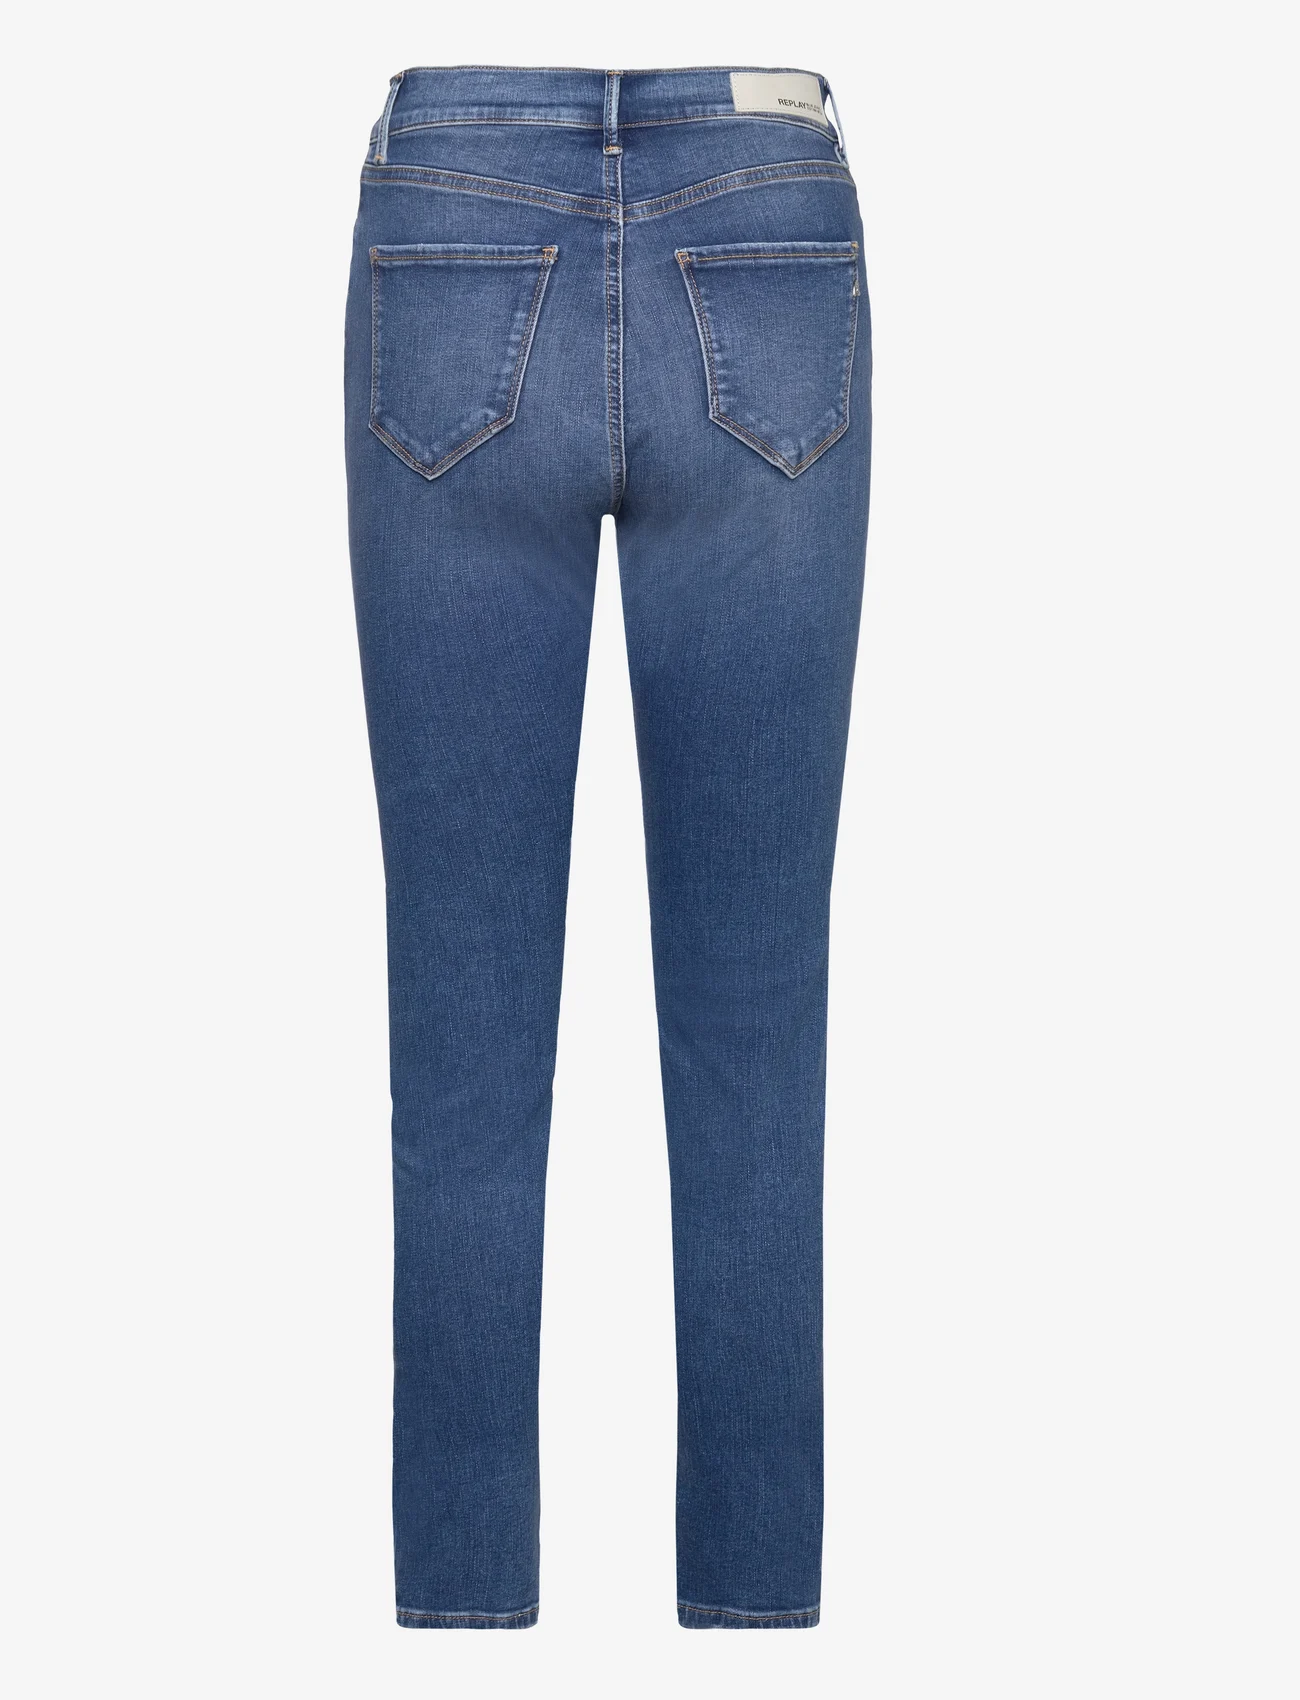 Replay - MJLA Trousers SUPER SLIM HIGH WAIST - slim fit jeans - blue - 1